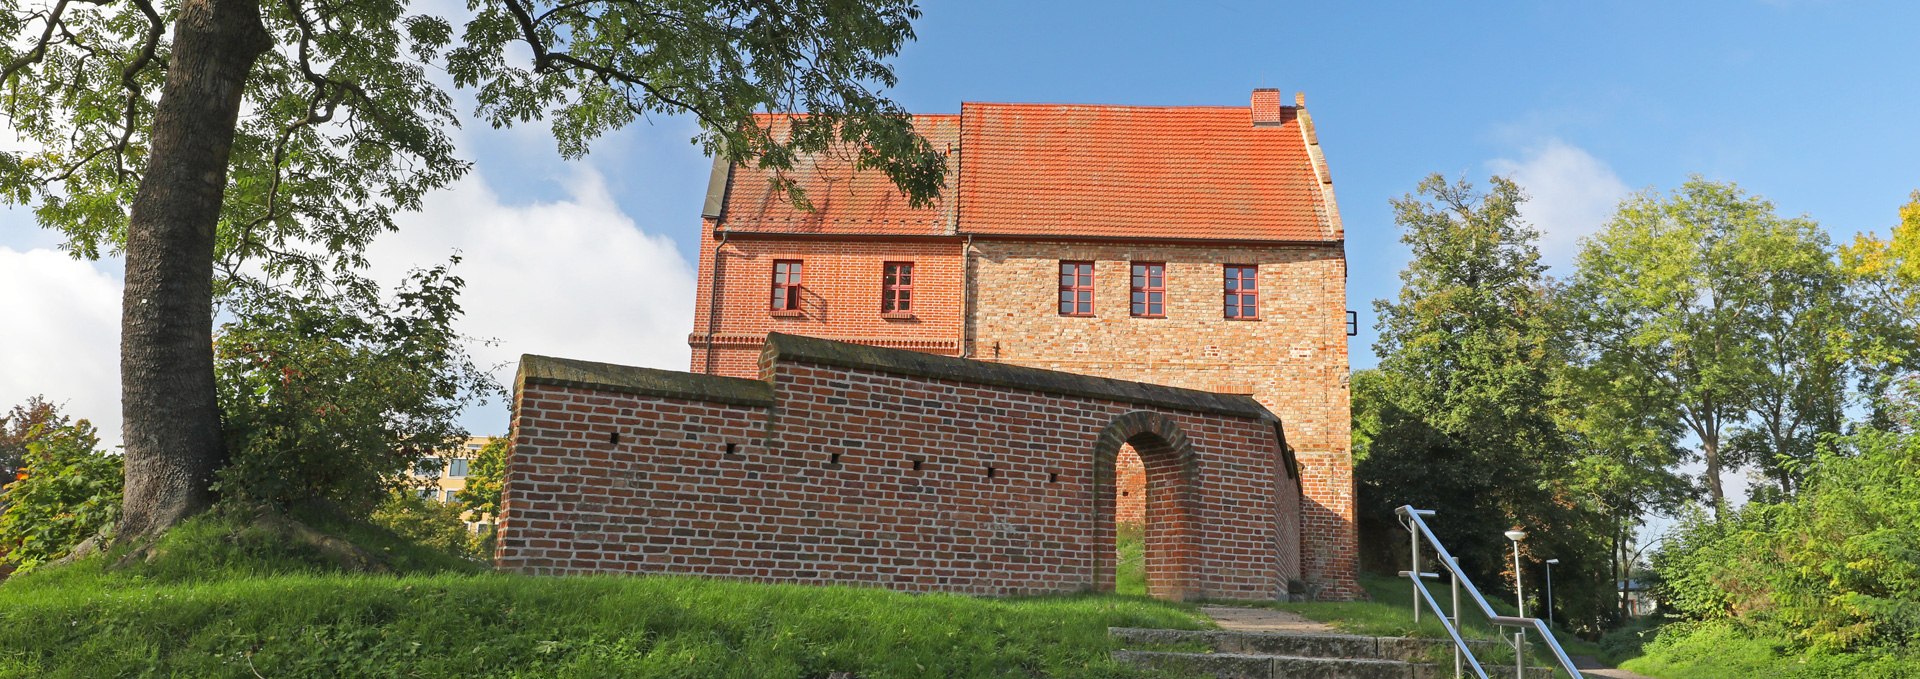 Old castle Penzlin_6, © TMV/Gohlke